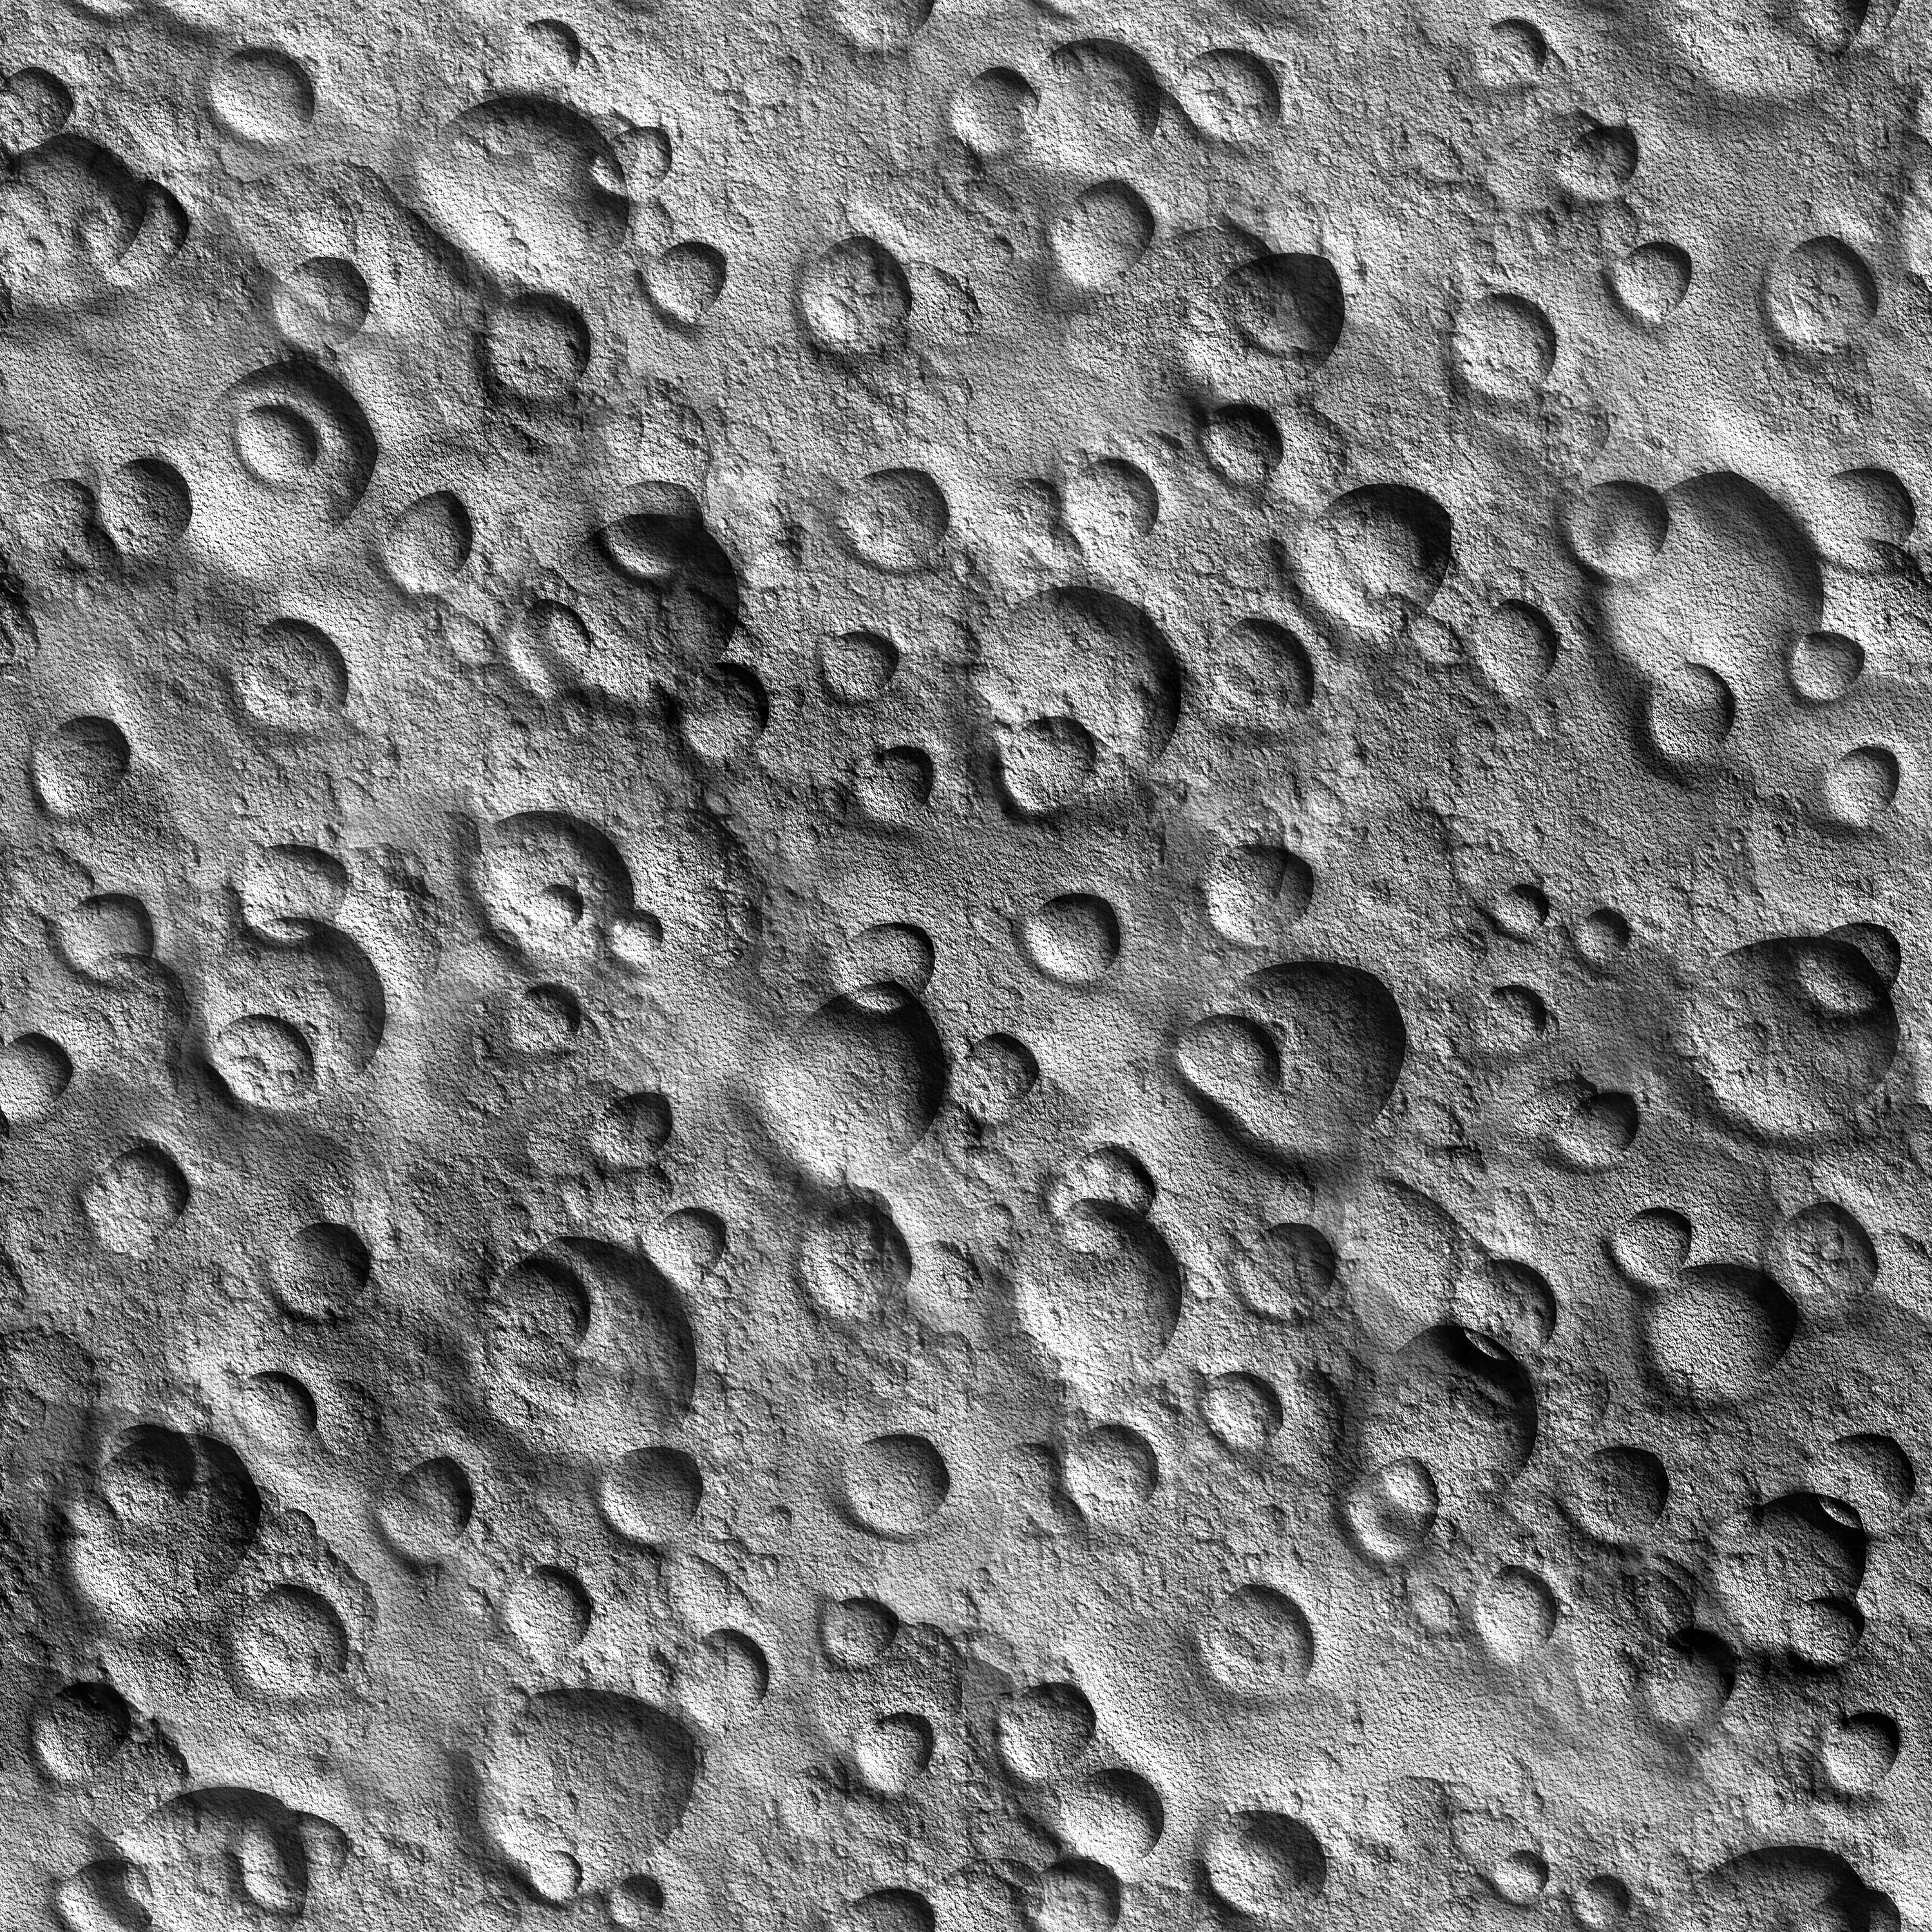 176-16526530-surface-of-the-moon-3d-illustration.jpg